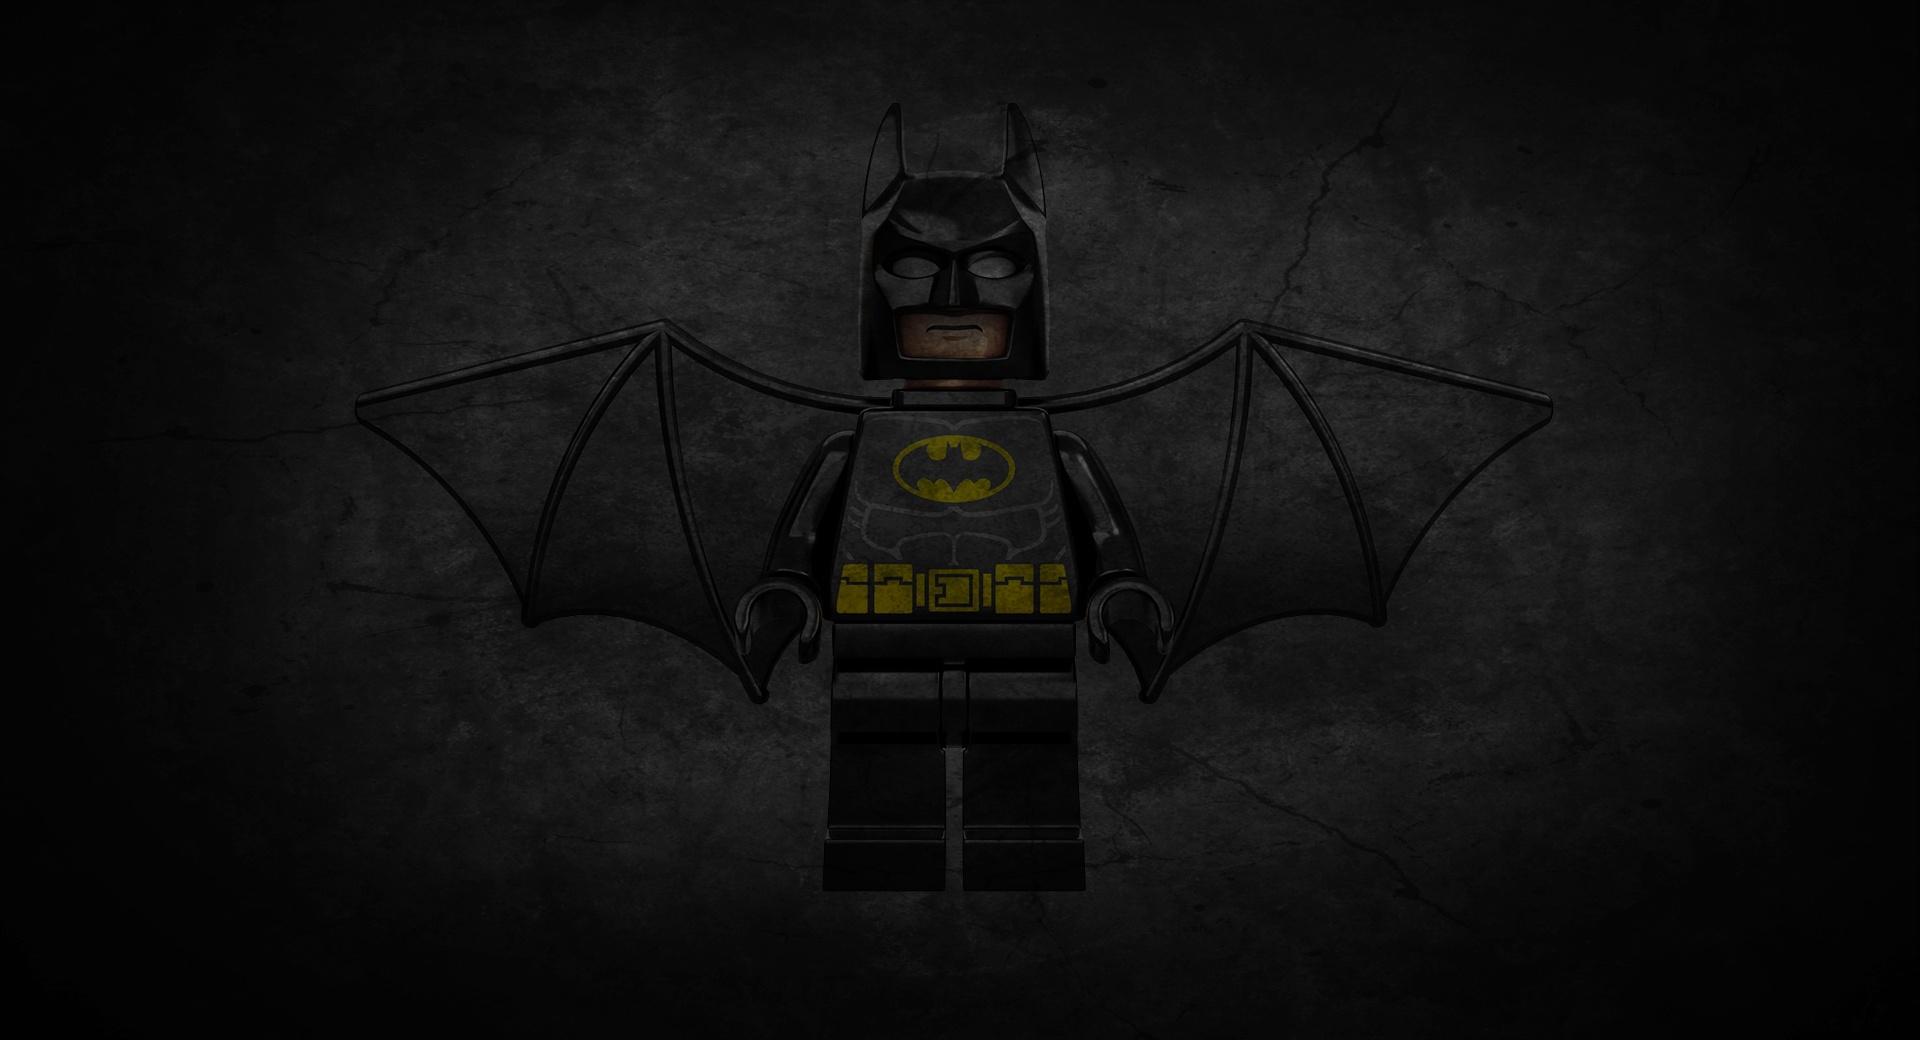 Lego Batman at 1024 x 1024 iPad size wallpapers HD quality